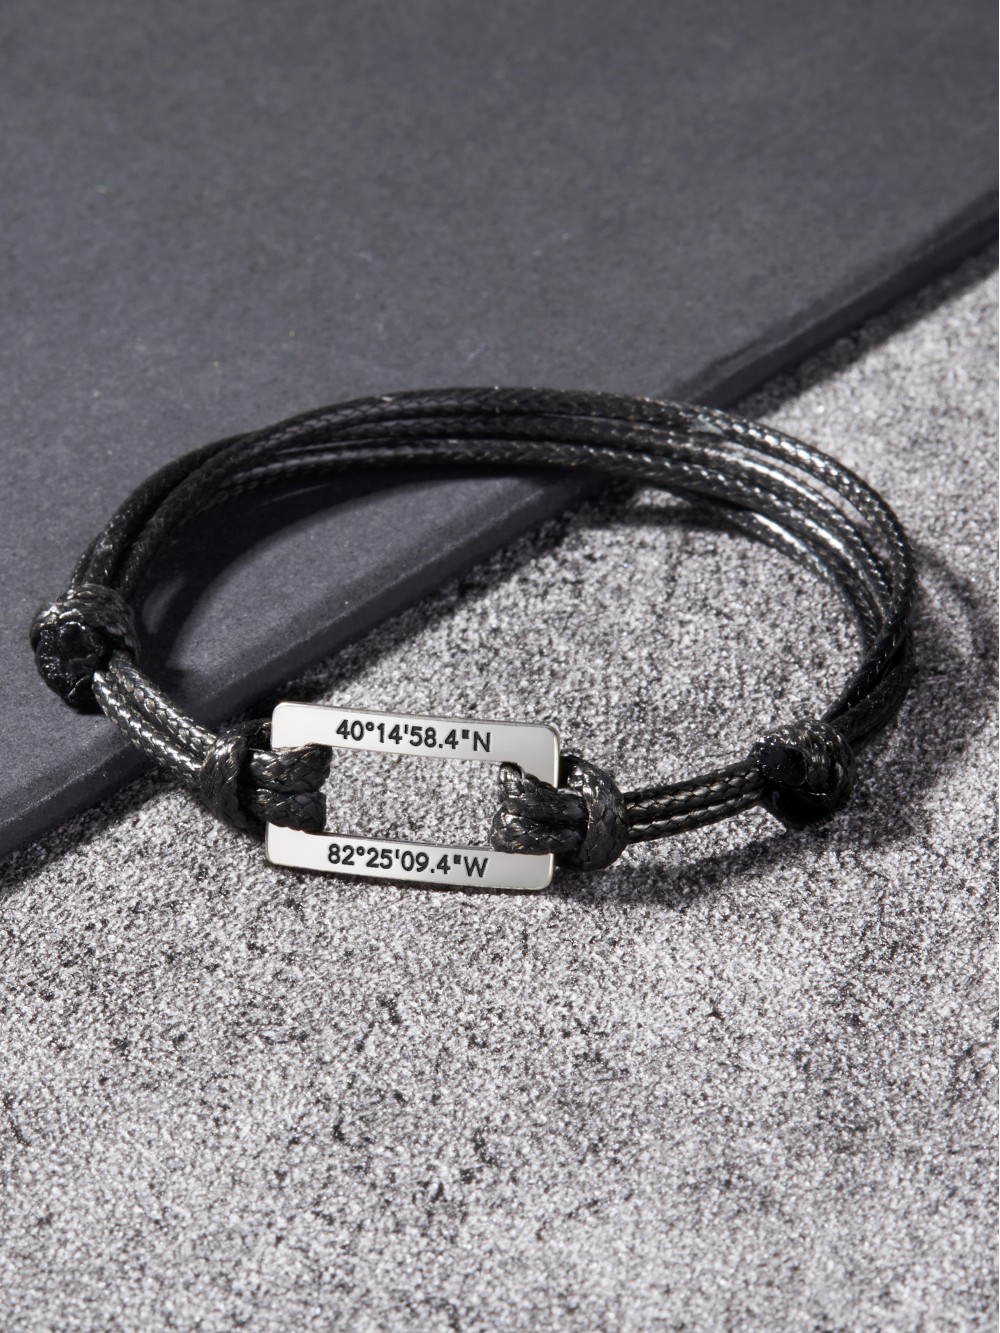 Personalized Coordinate Bracelet for Men - Rectangular